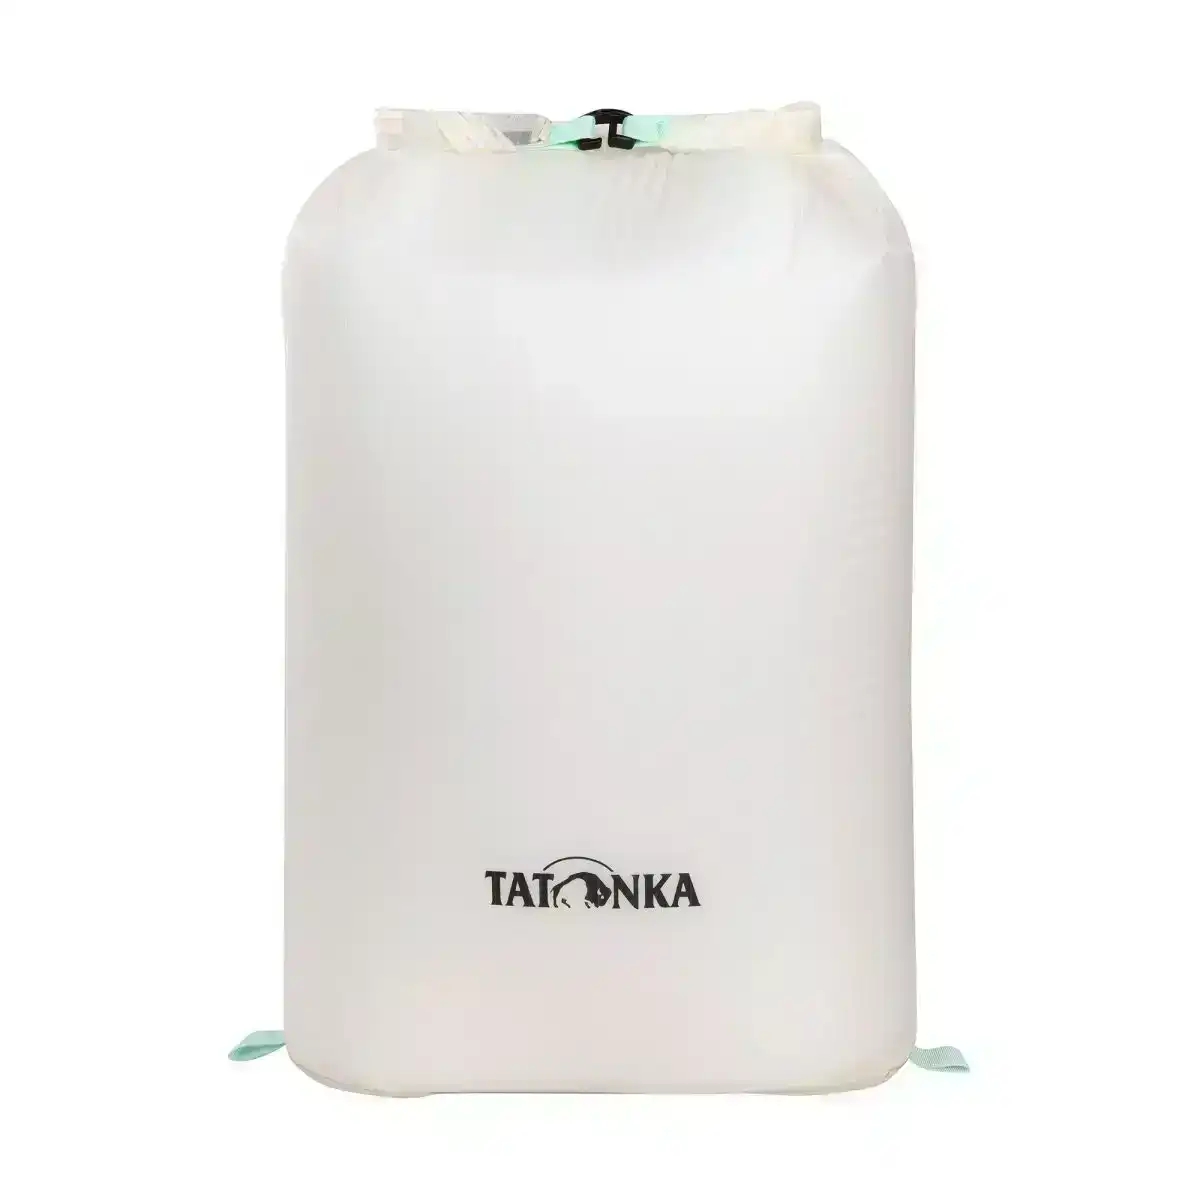 Tatonka SQZY 15L Dry Bag Packing Sac Storage/Organisation Waterproof Light Grey